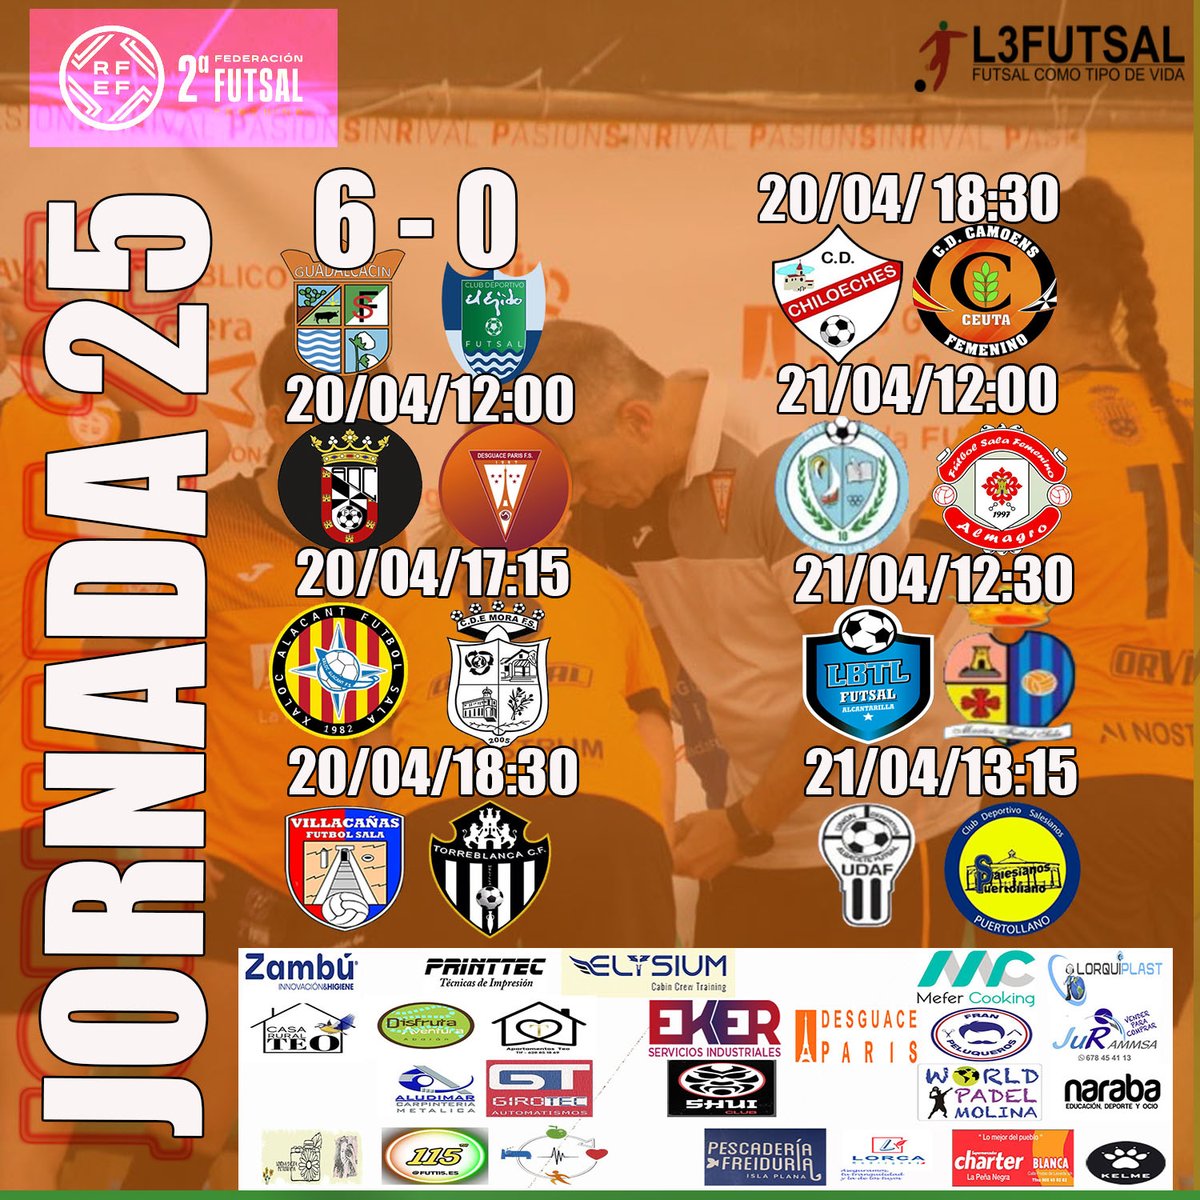 #lacasadelfutsalmurciano
partidos fin de semana
jornada 25
2ª rfef futsal femenina grupo 3
#futsalmur #l3futsal #SomosFutsal #somosffrm #fotografiadeportiva #disfrutalaliga